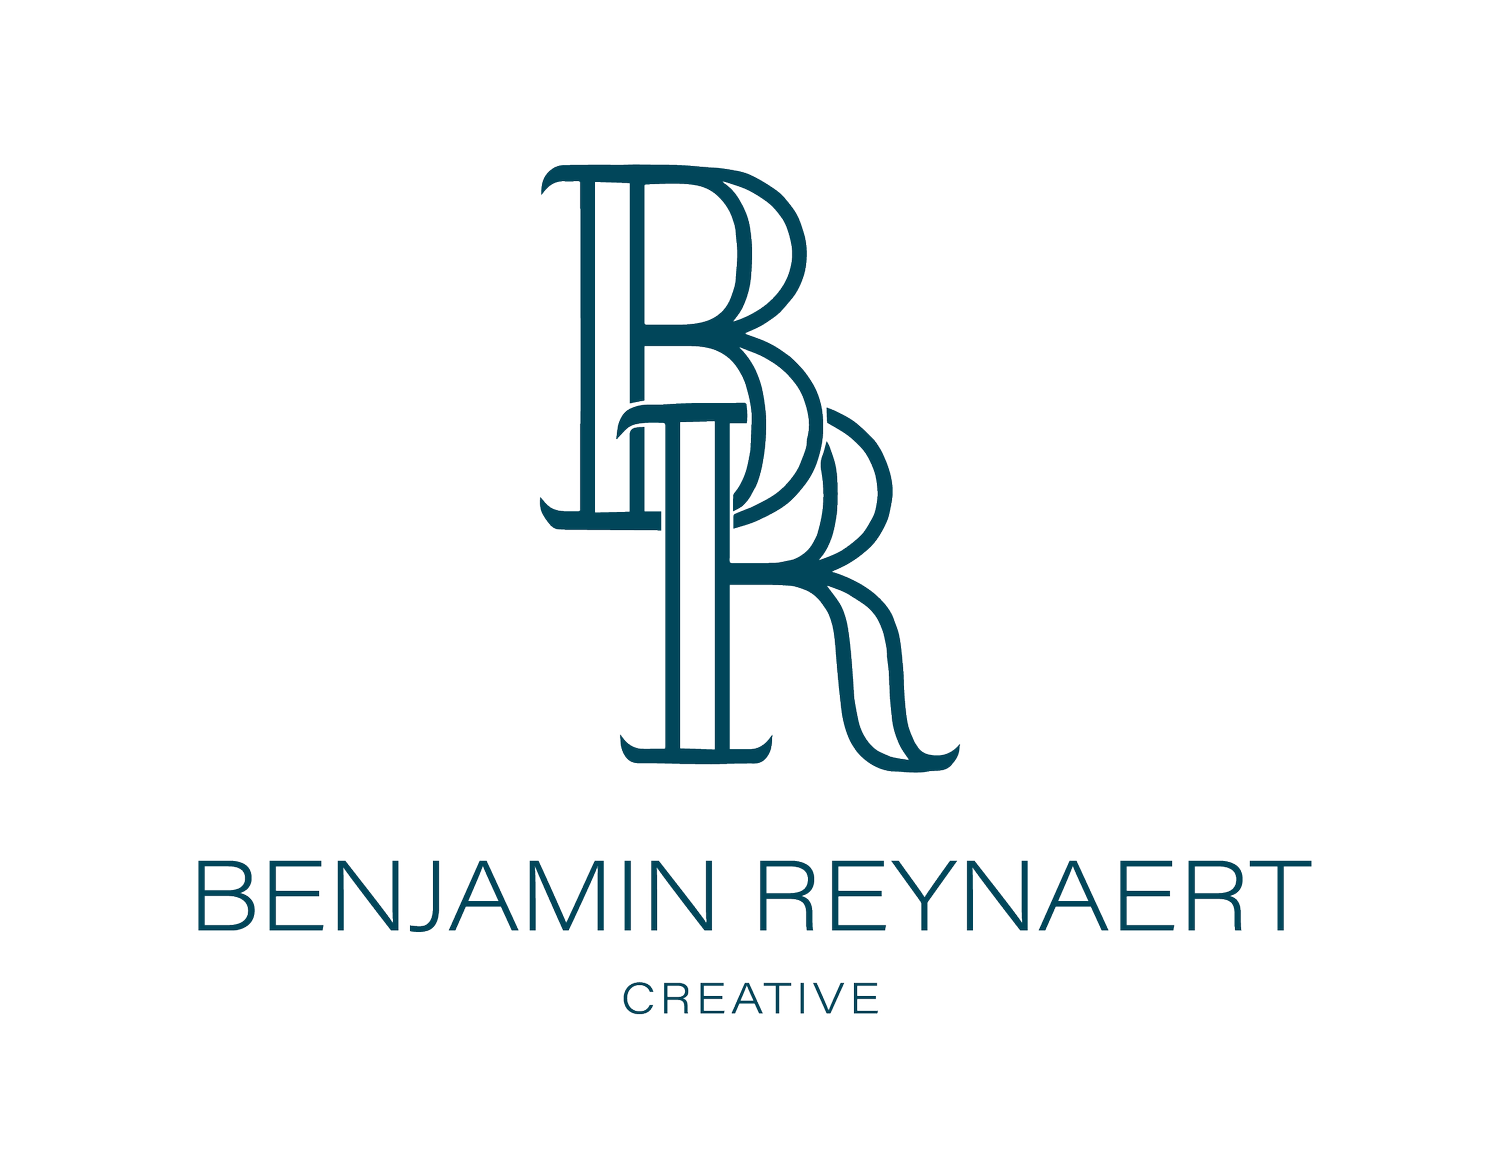 Benjamin Reynaert Creative Co